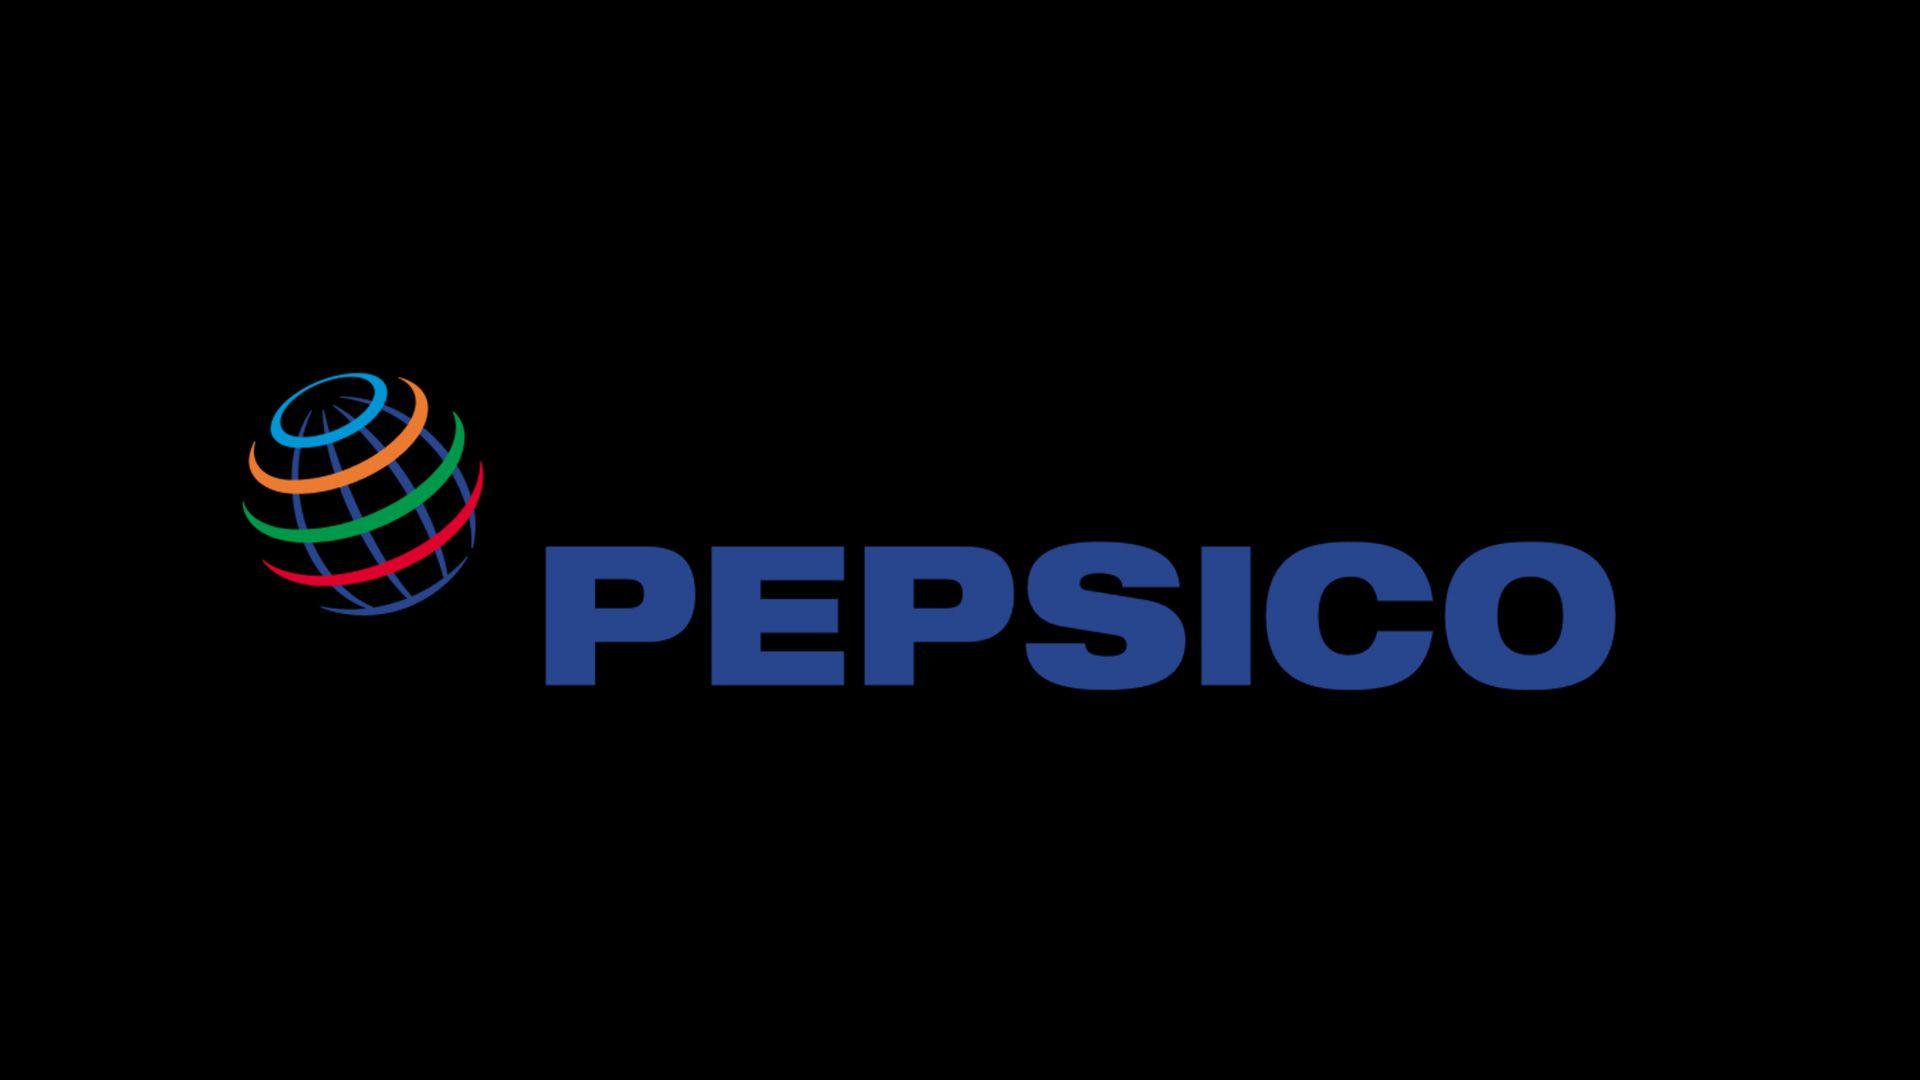 Pepsico Logo Black Background wallpaper 2018 in Brands & Logos